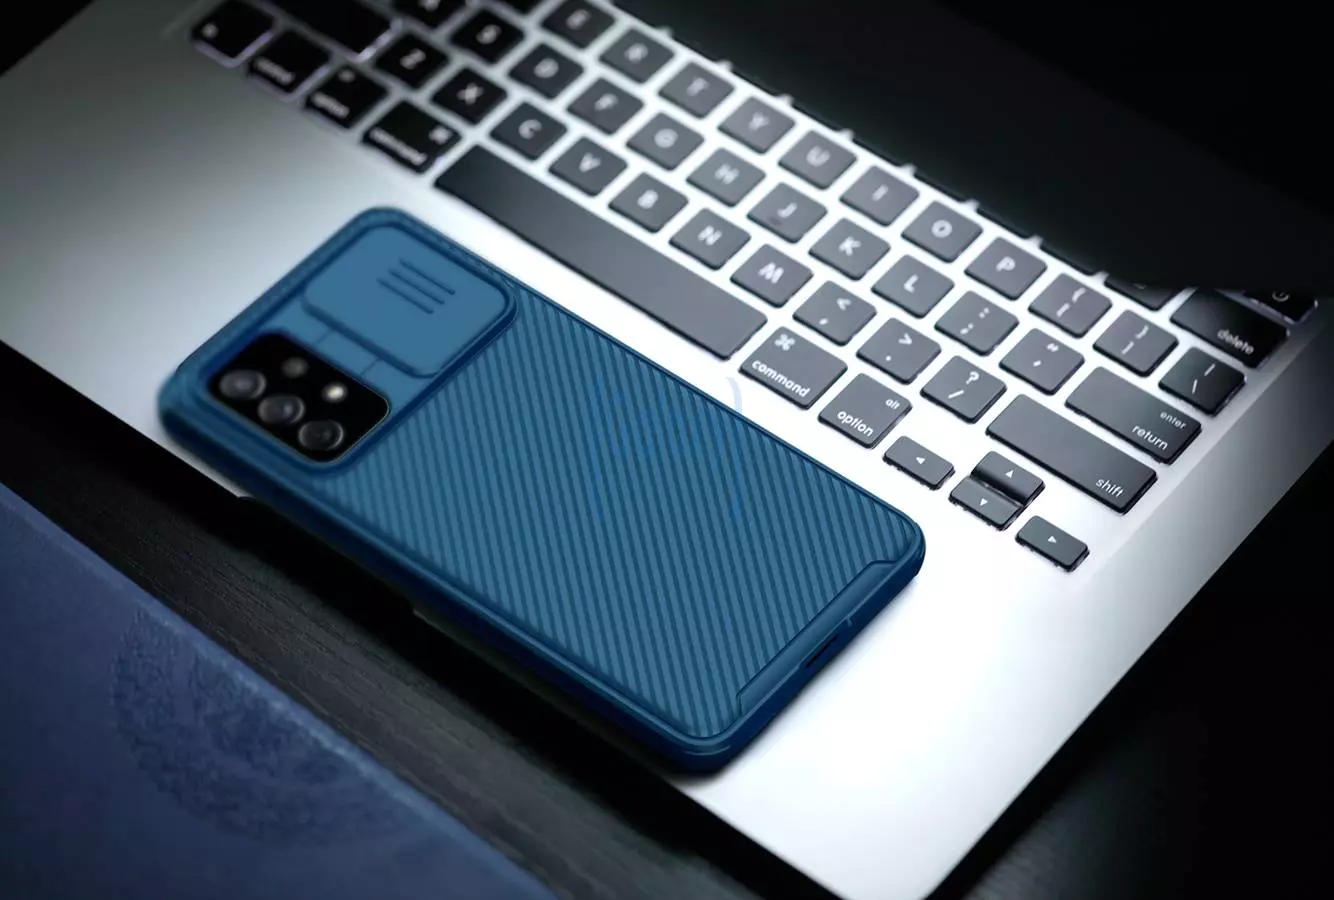 Чехол бампер для Samsung Galaxy A72 Nillkin CamShield Pro Blue (Синий)